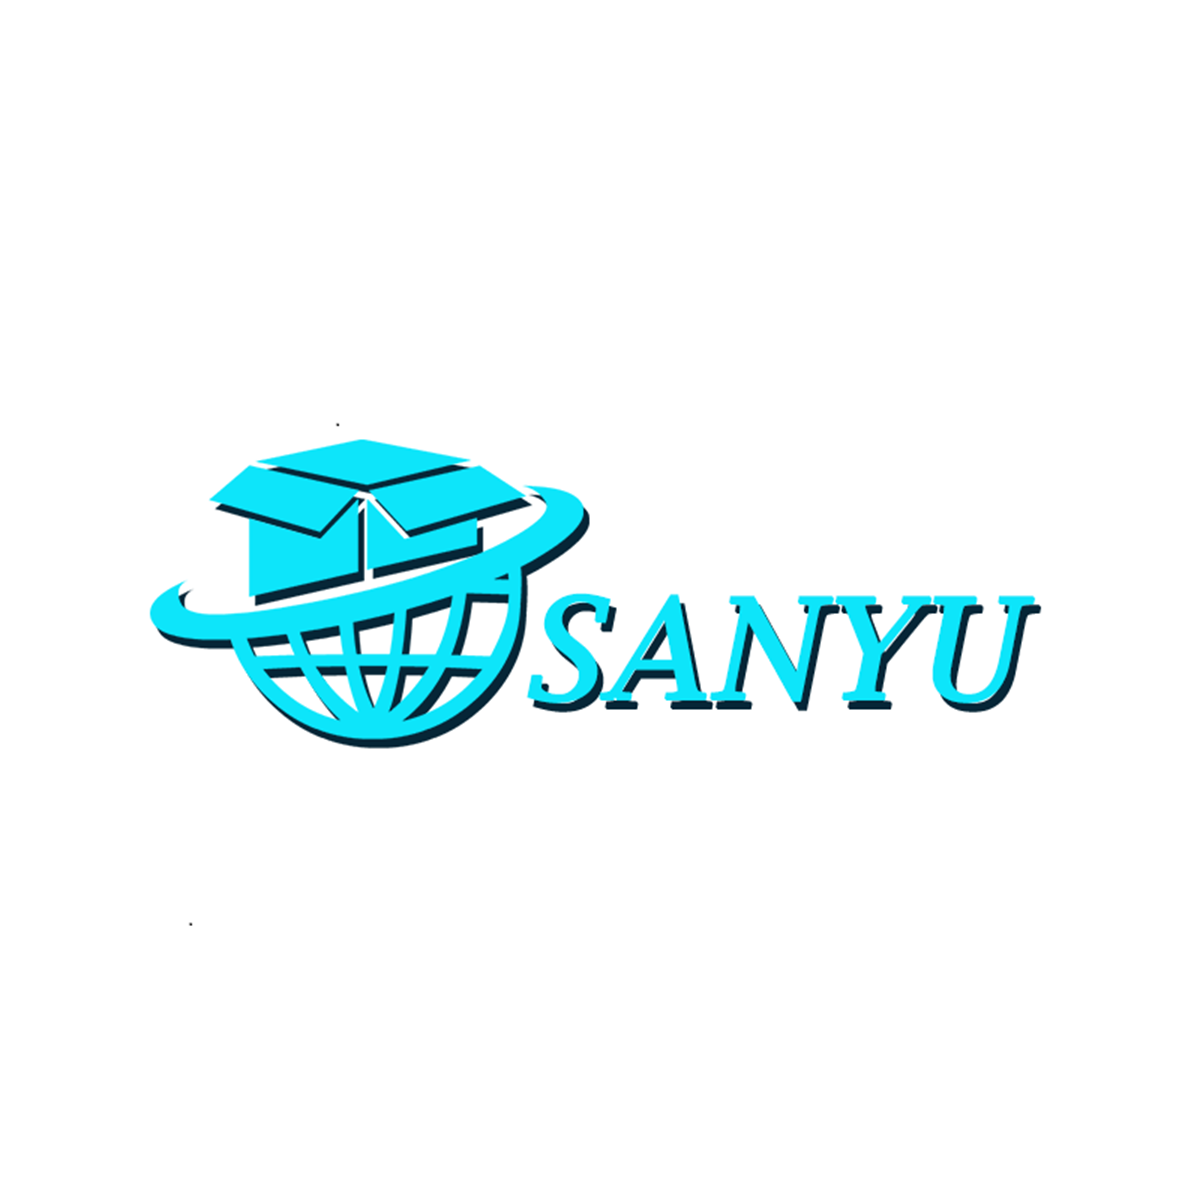 SANYU Dropshipping for Shopify